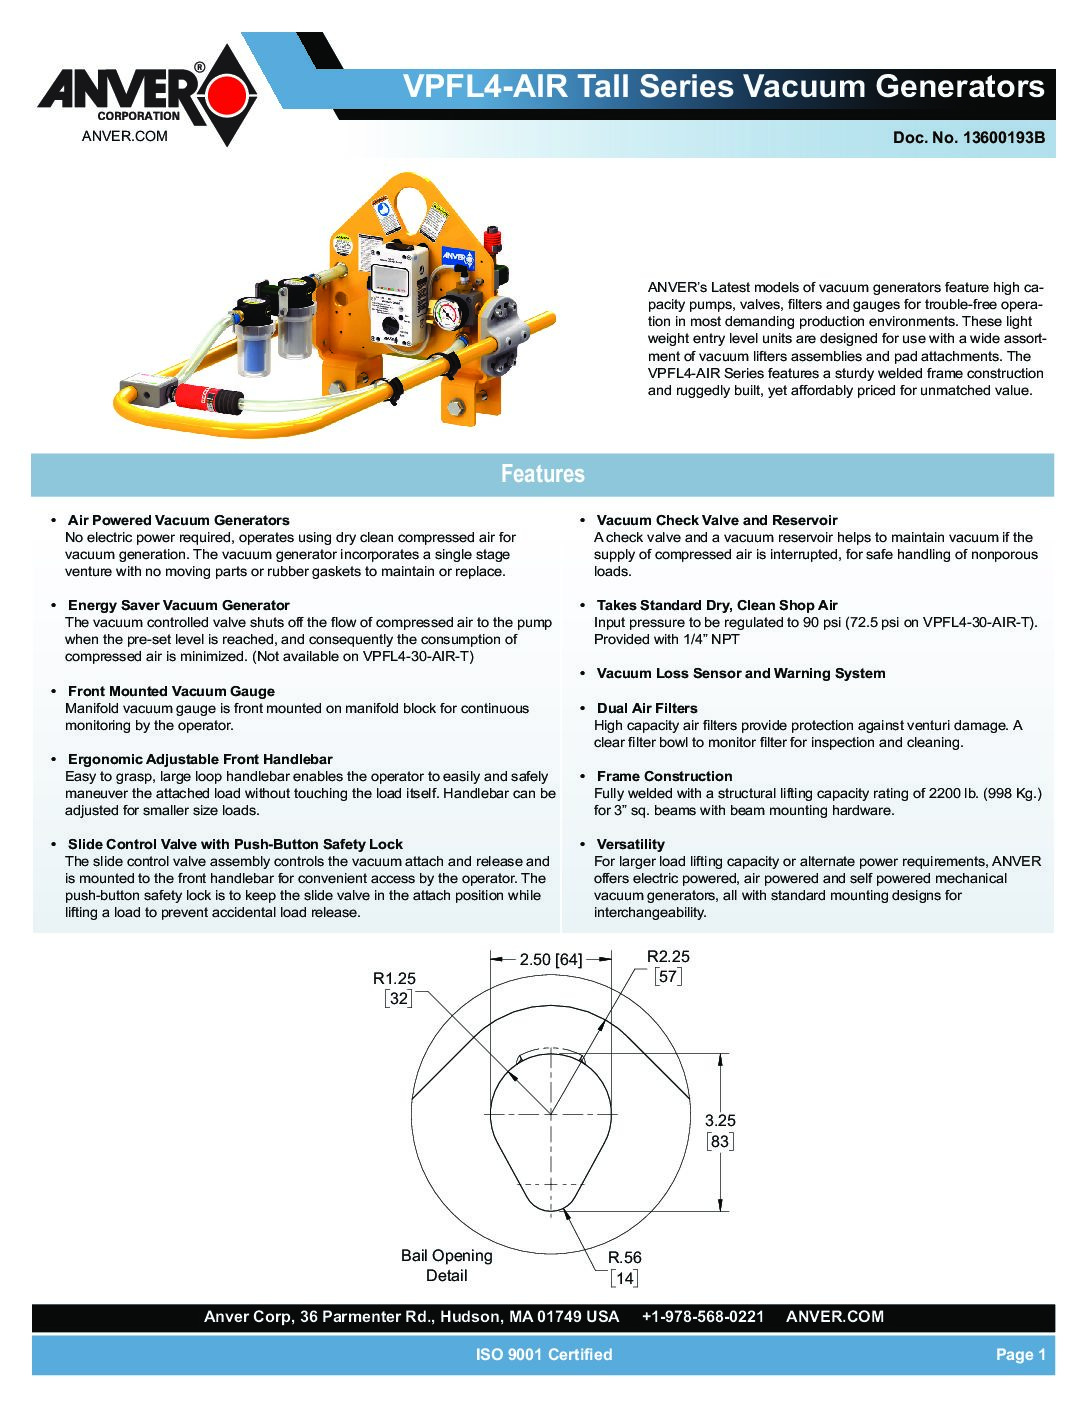 Anver Air Powered Vacuum Generator VPFL4 Tall Spread Sheet pdf